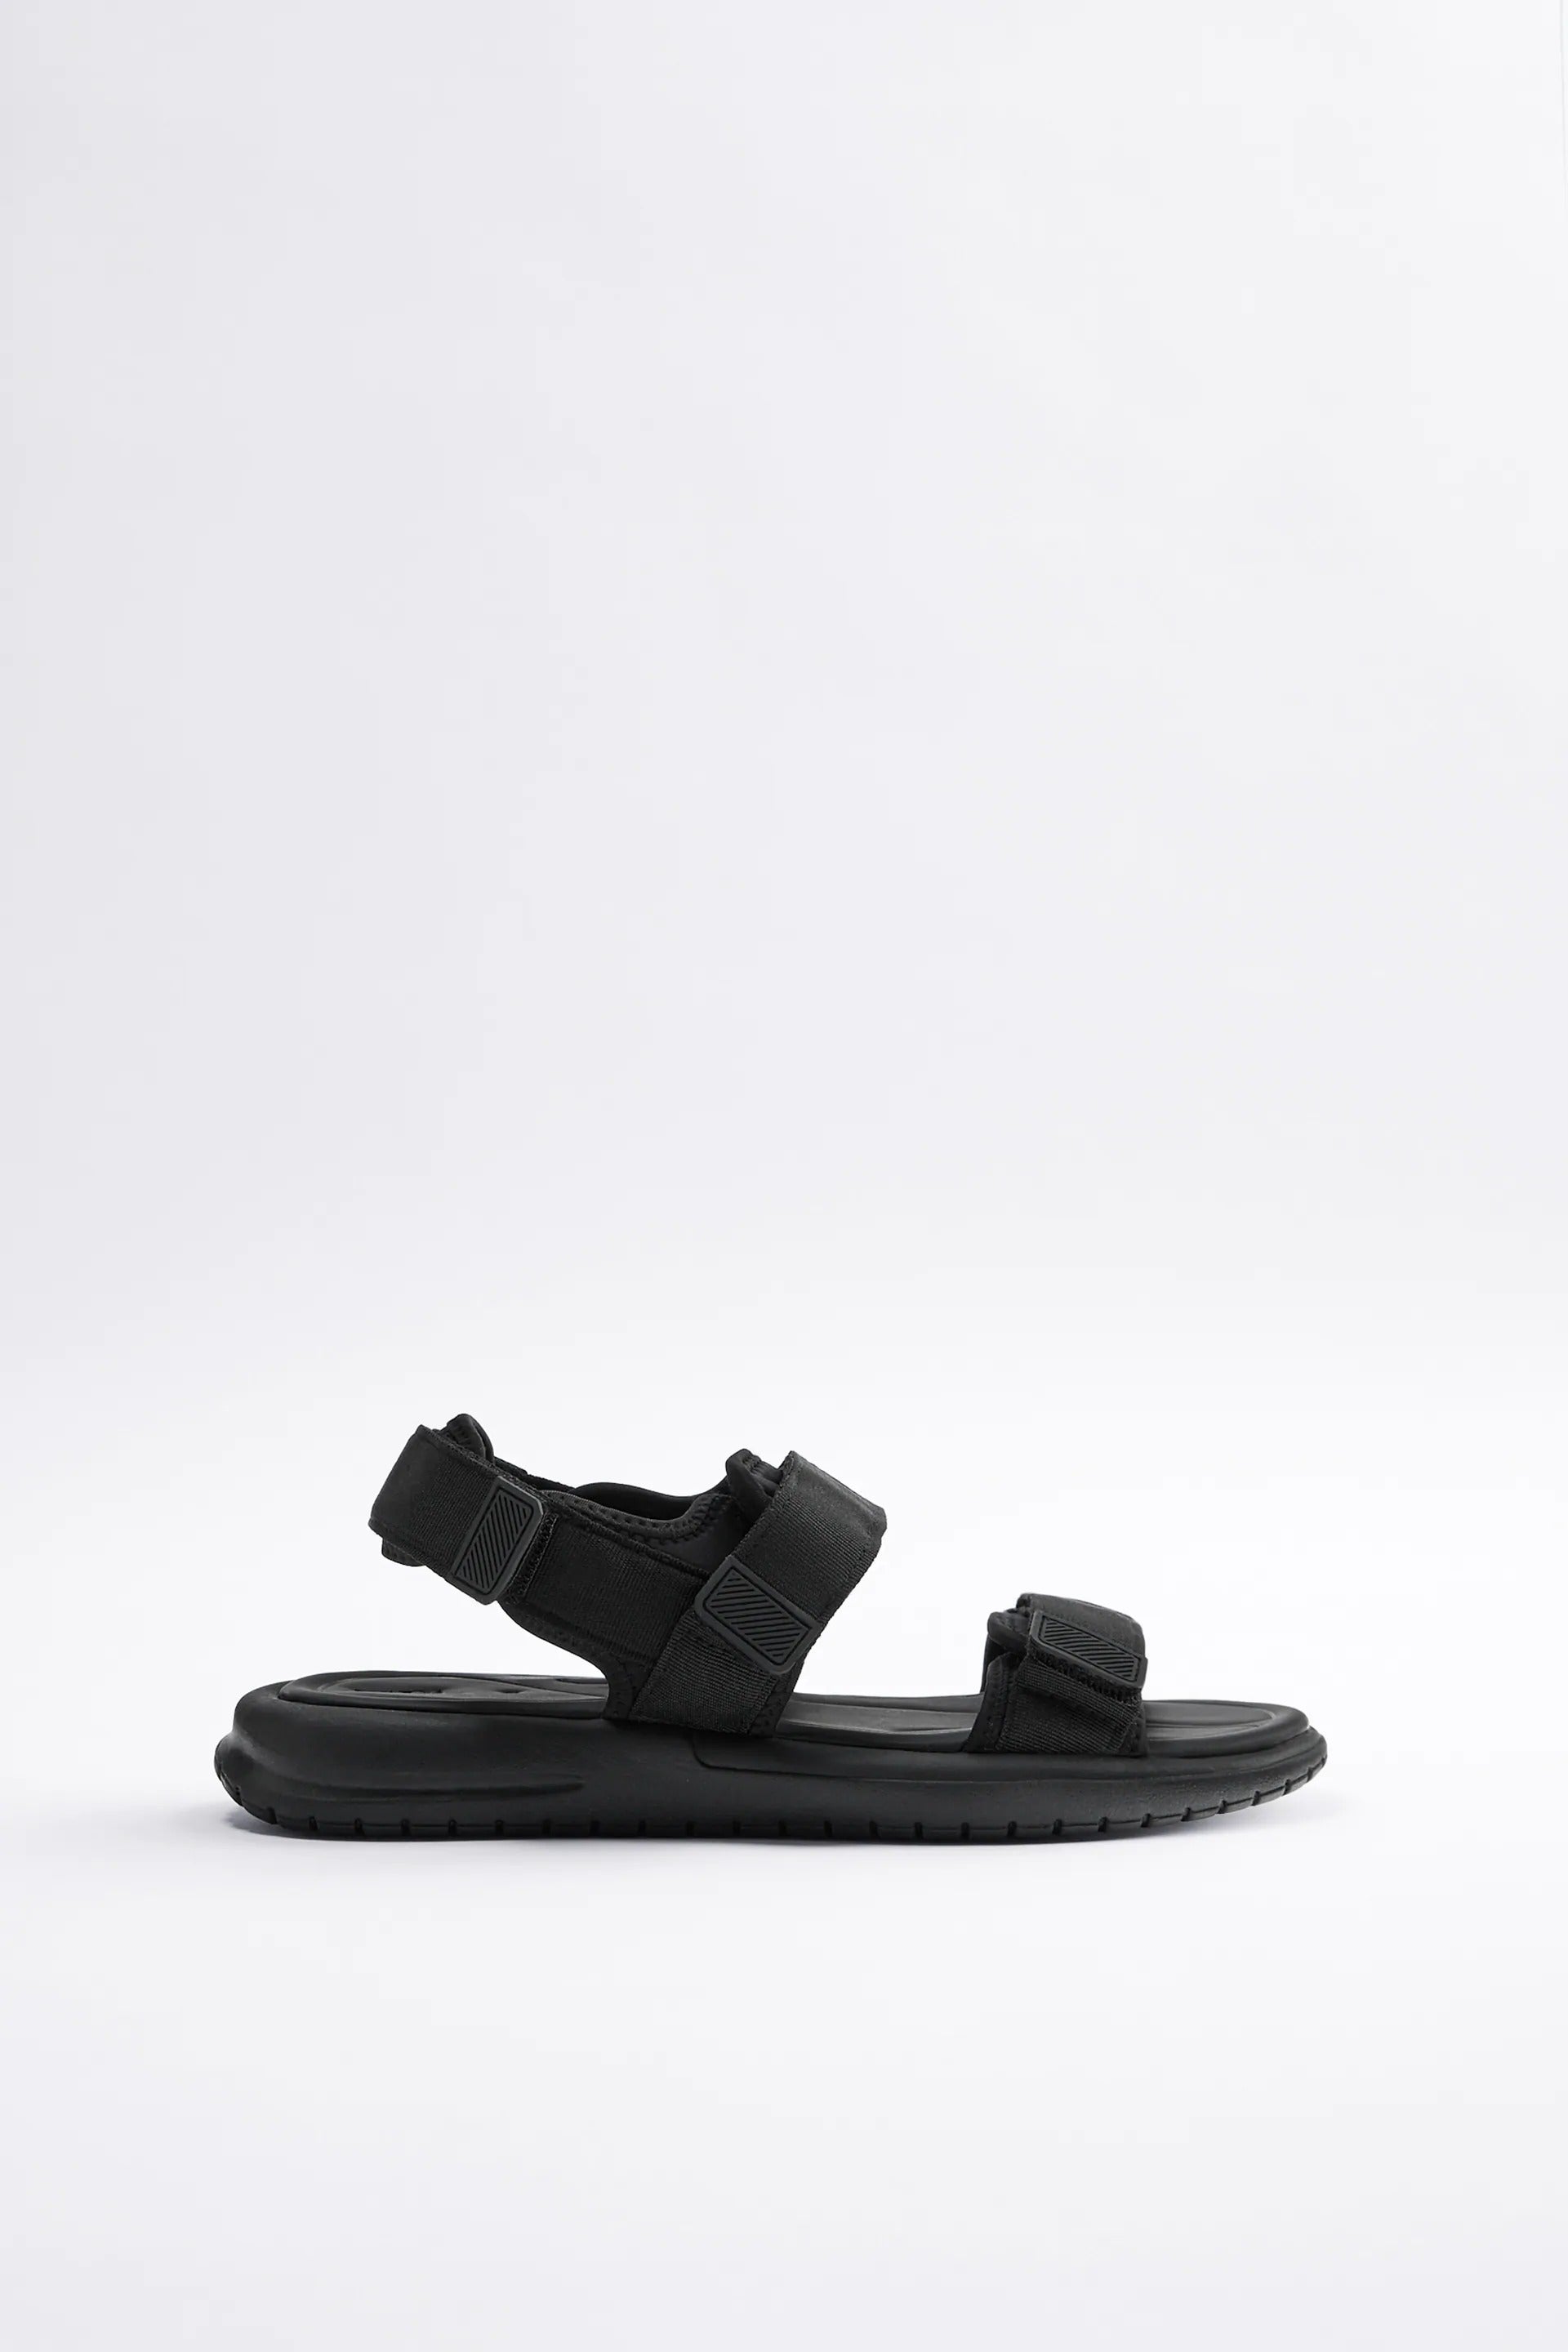 Zara + Chunky Sandals